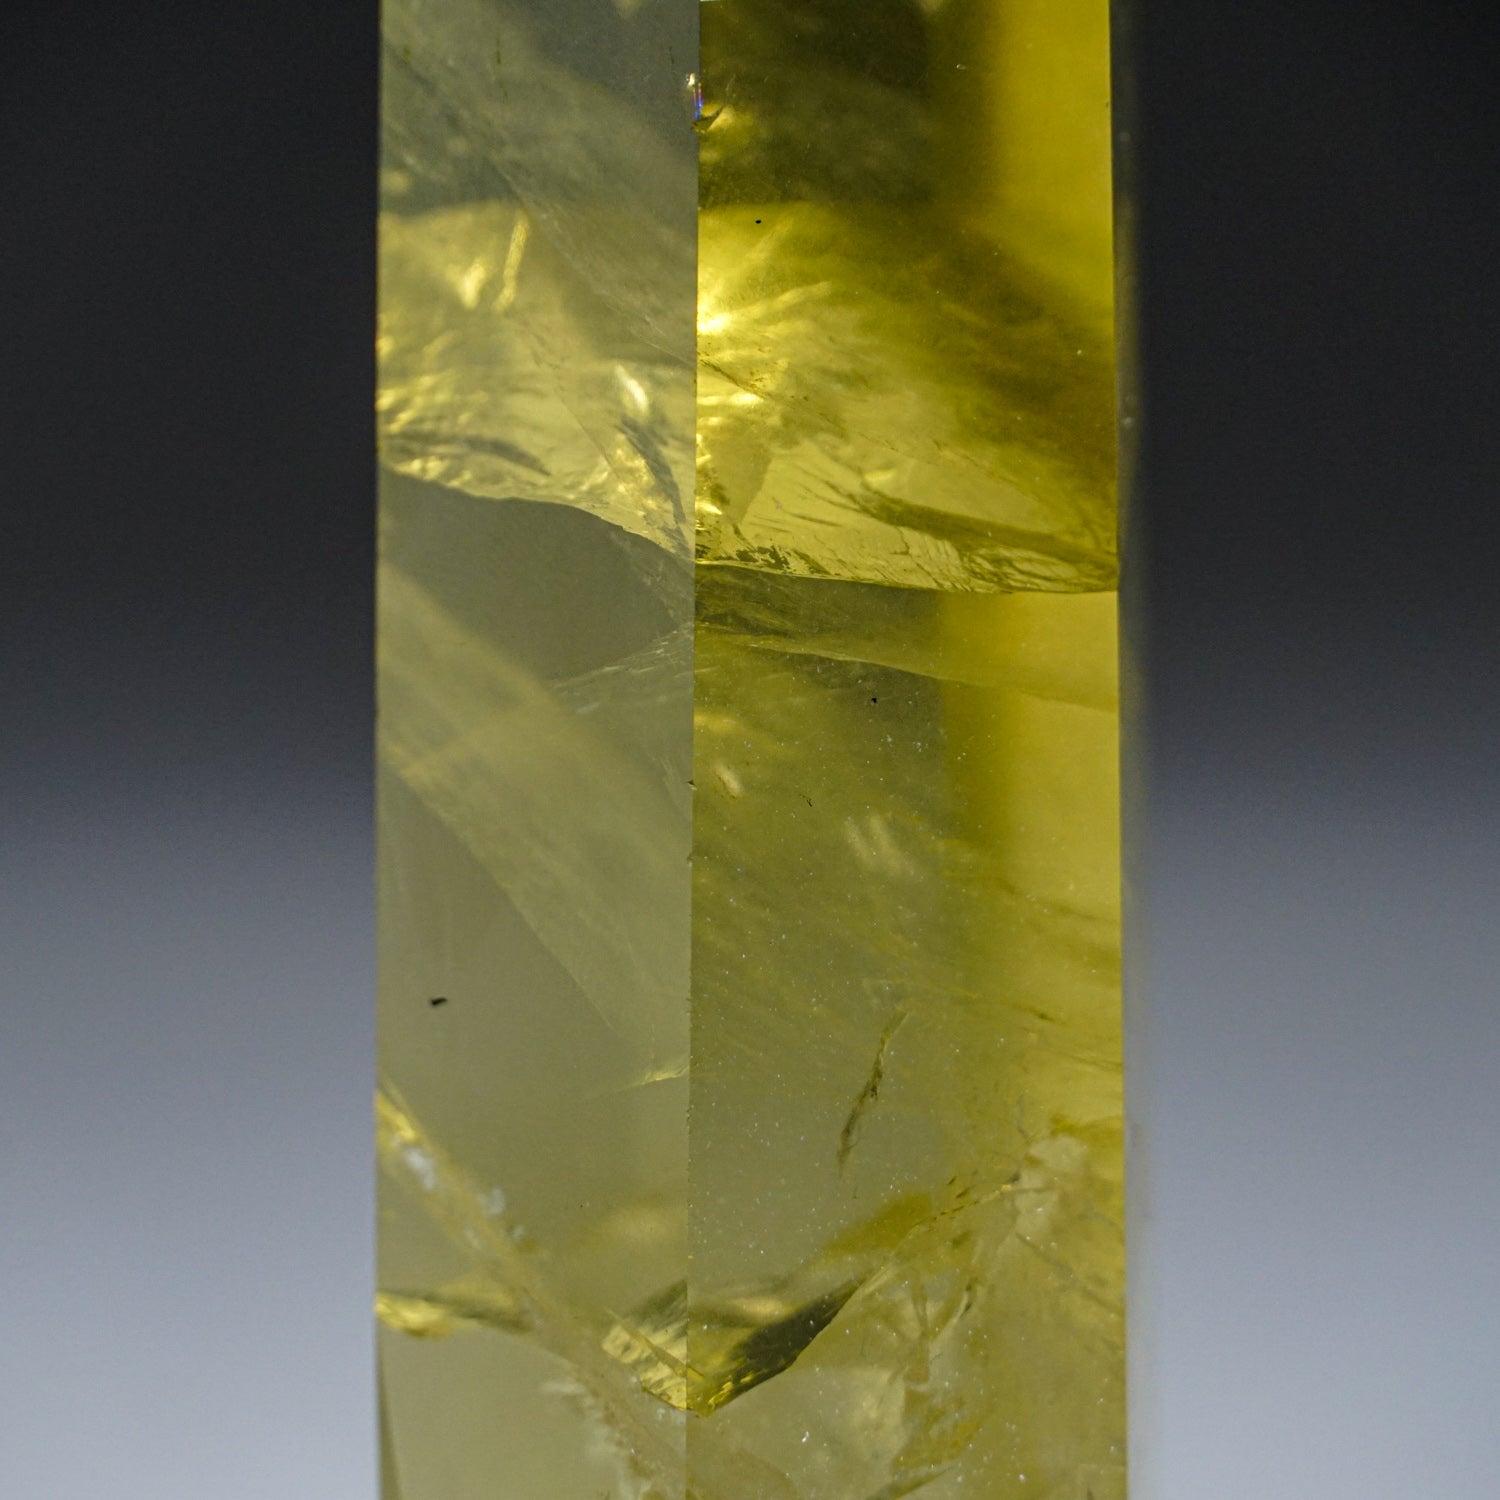 Polished Lemon Quartz Crystal Point from Brazil (150 grams)